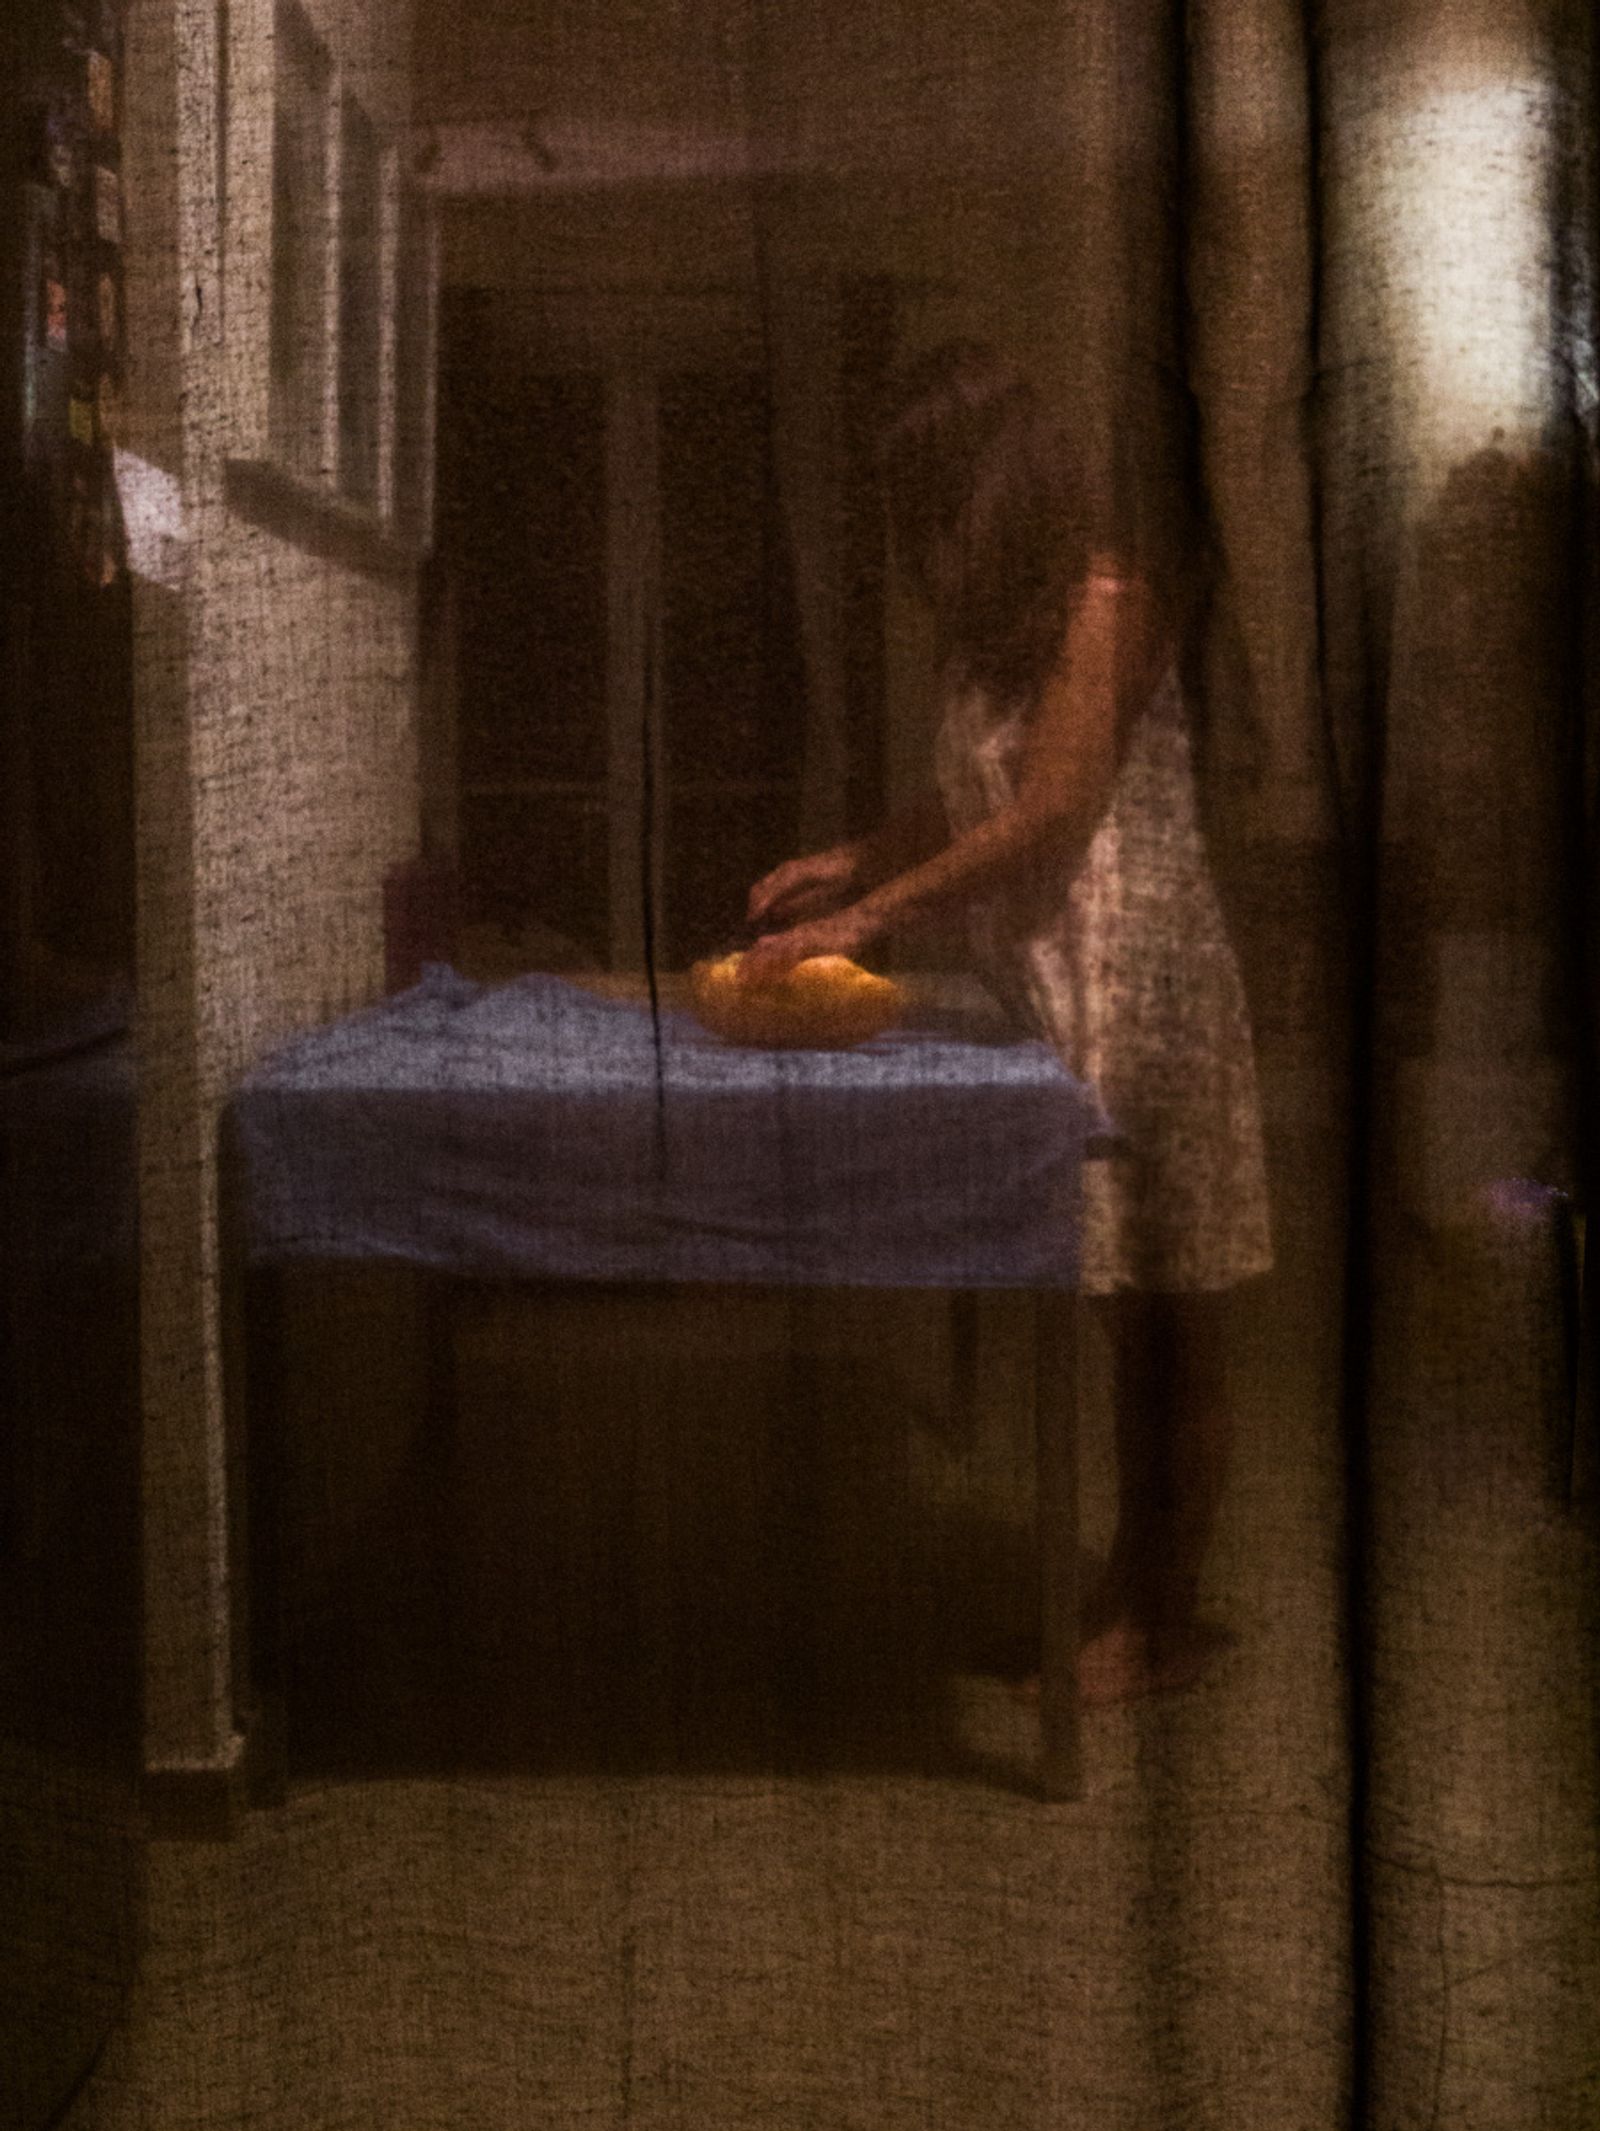 © Eirini Lachana - Image from the Autonomy photography project